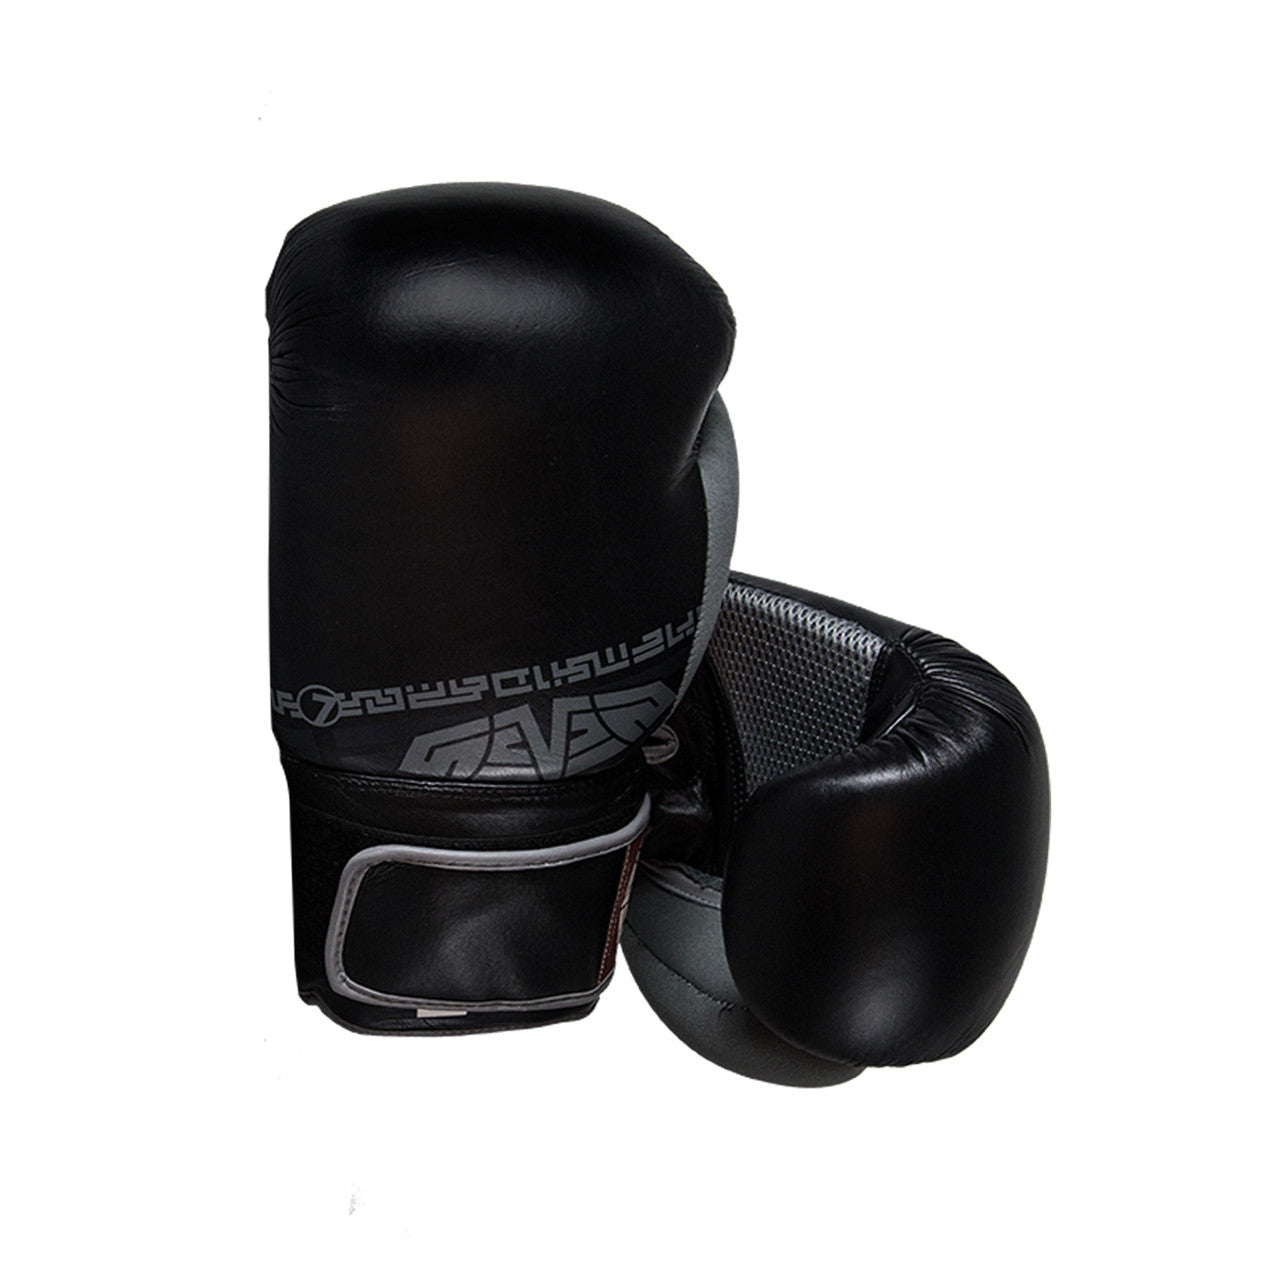 Seven American Boxing Glove Black